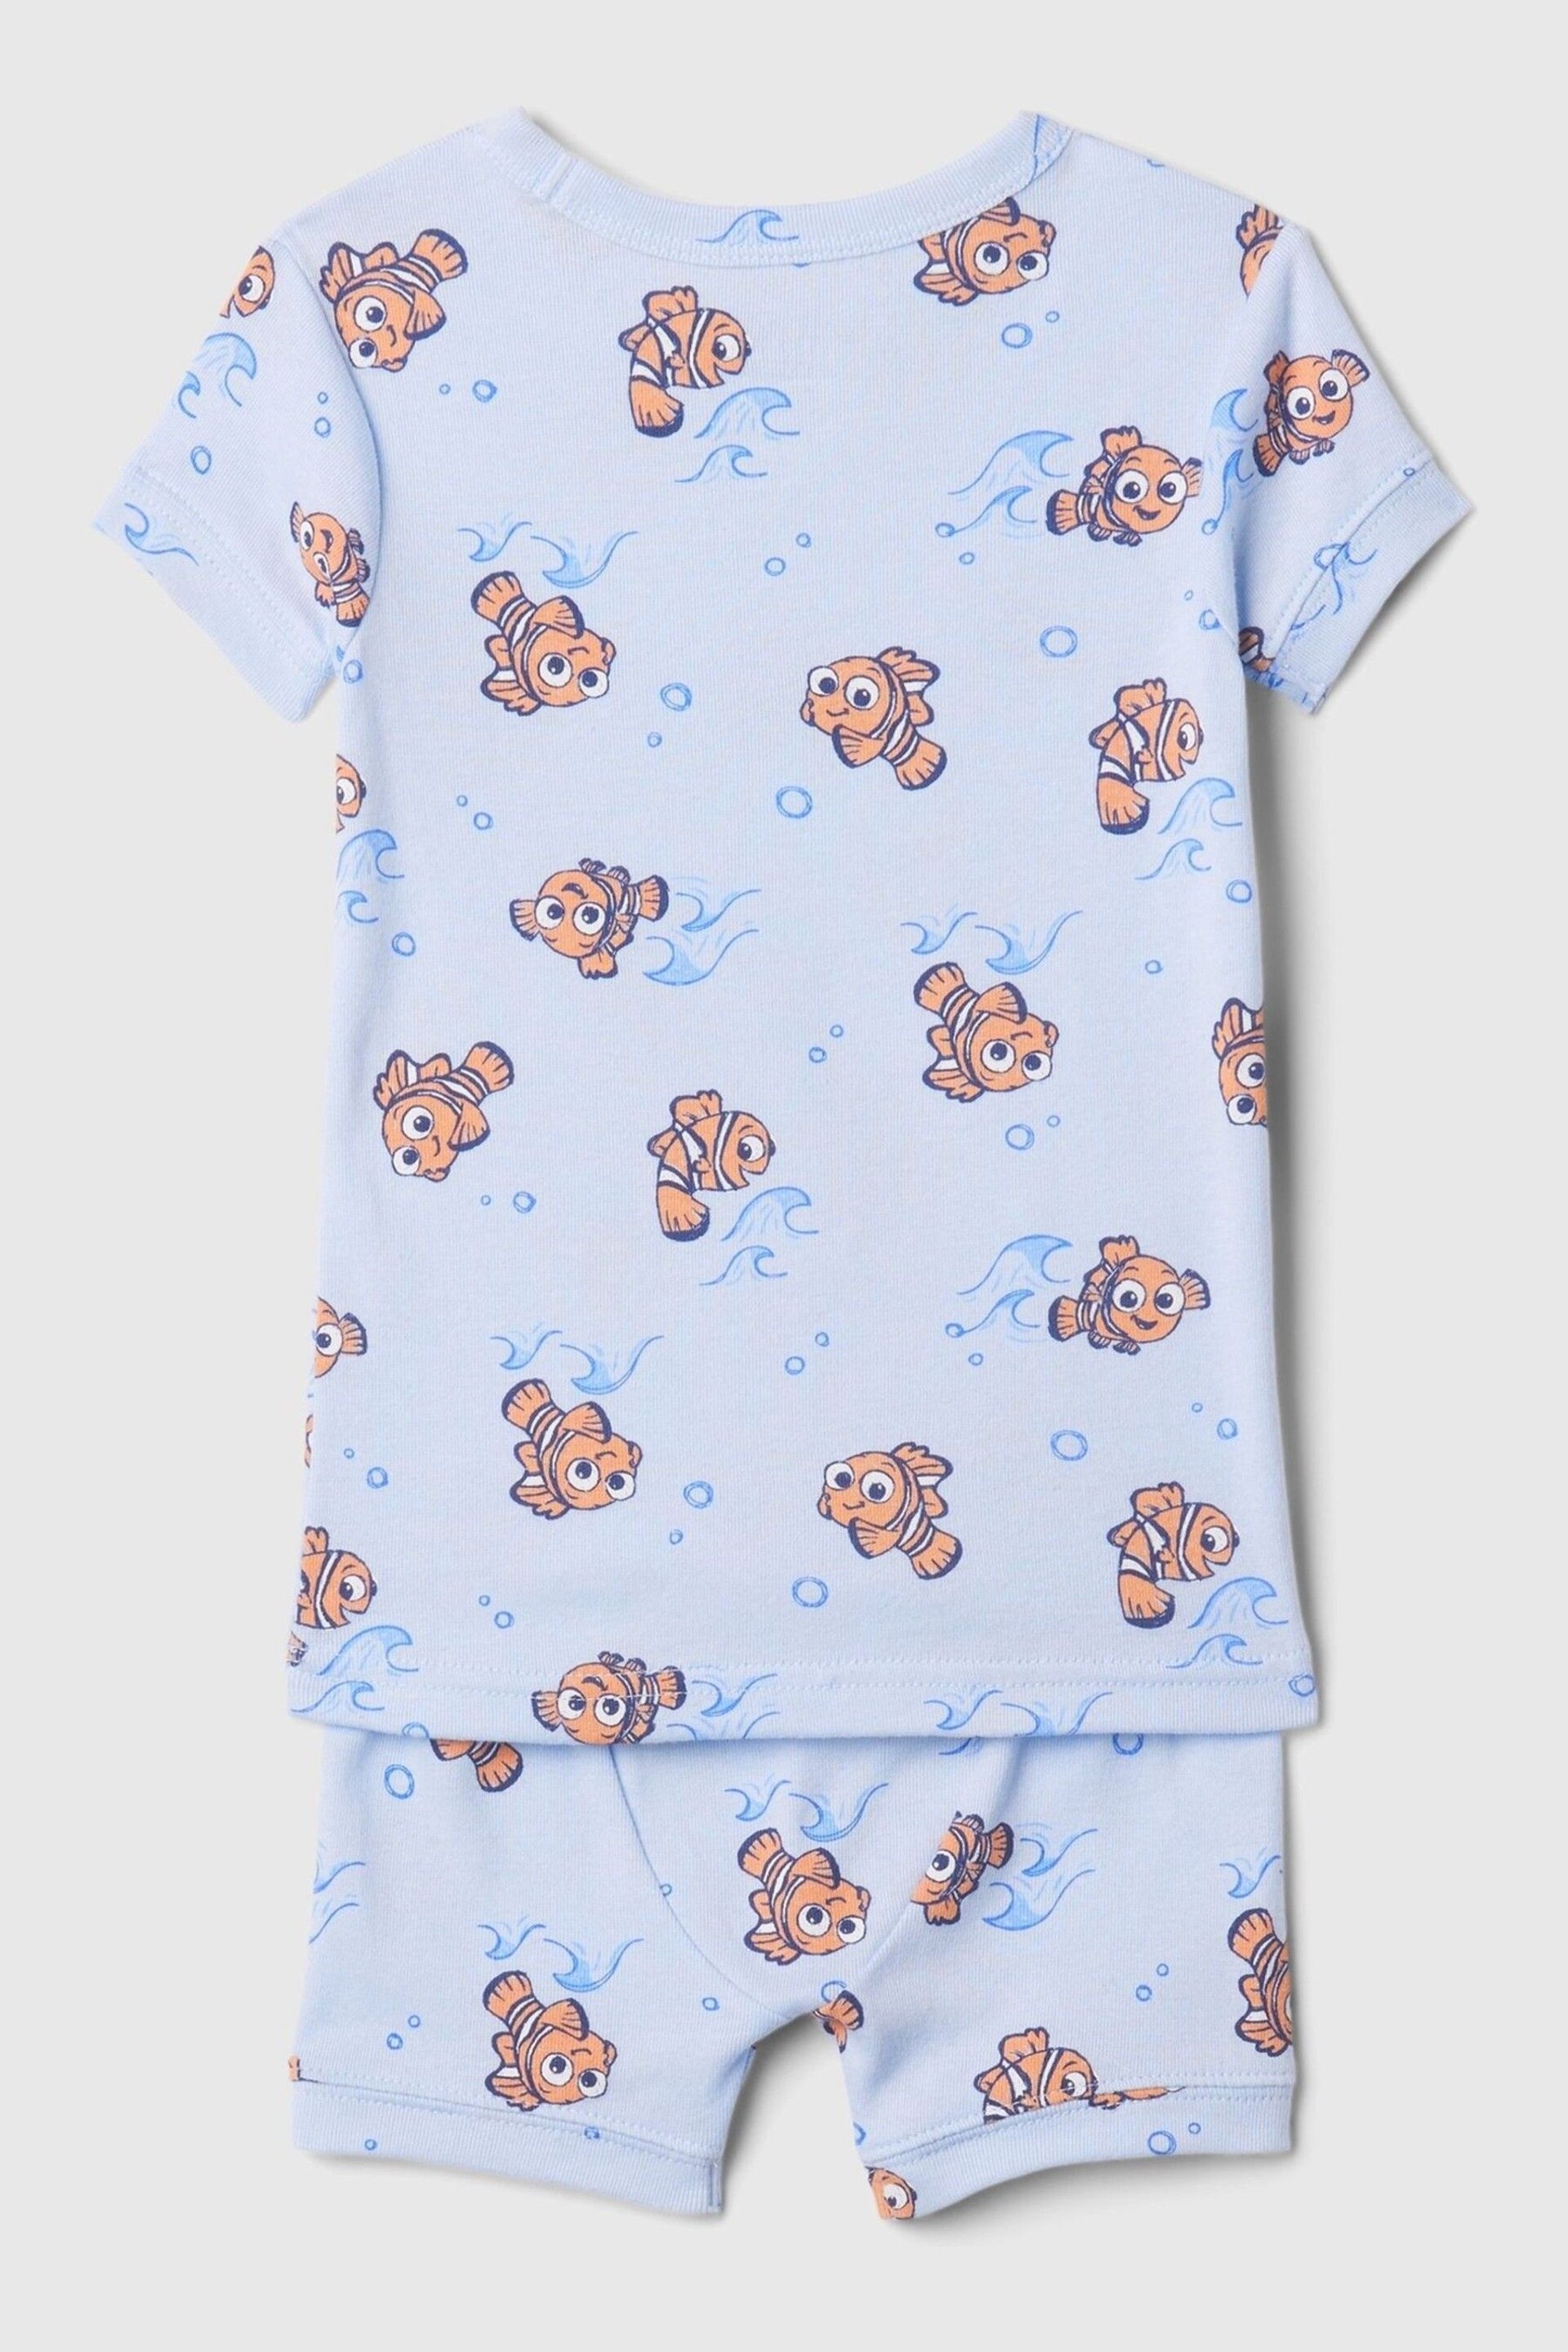 Gap Blue Disney Finding Nemo Organic Cotton Pyjama Set (6mths-5yrs) - Image 2 of 2